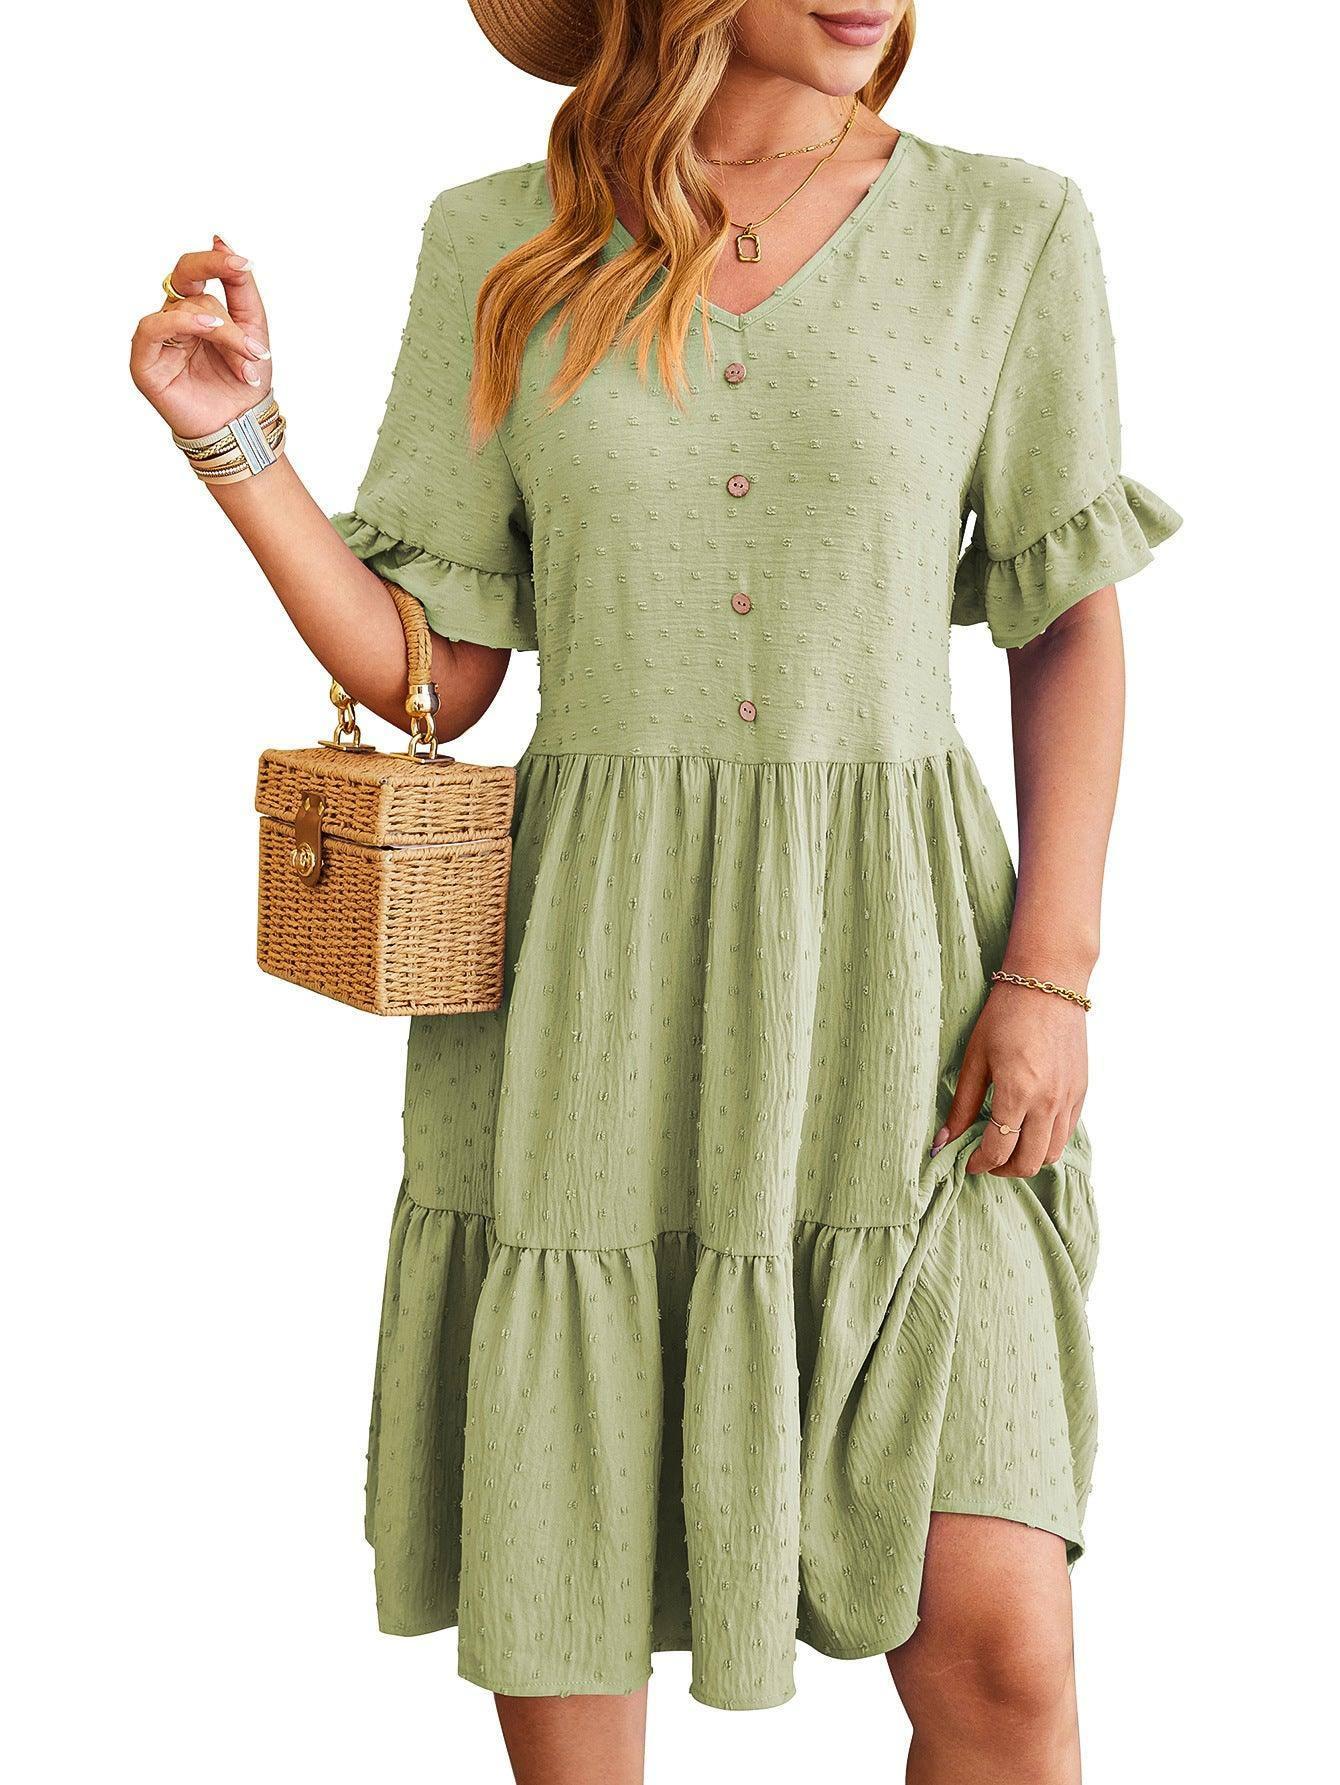 New V-neck Ruffle Short-sleeved Dress Summer Casual Fashion-Green-5